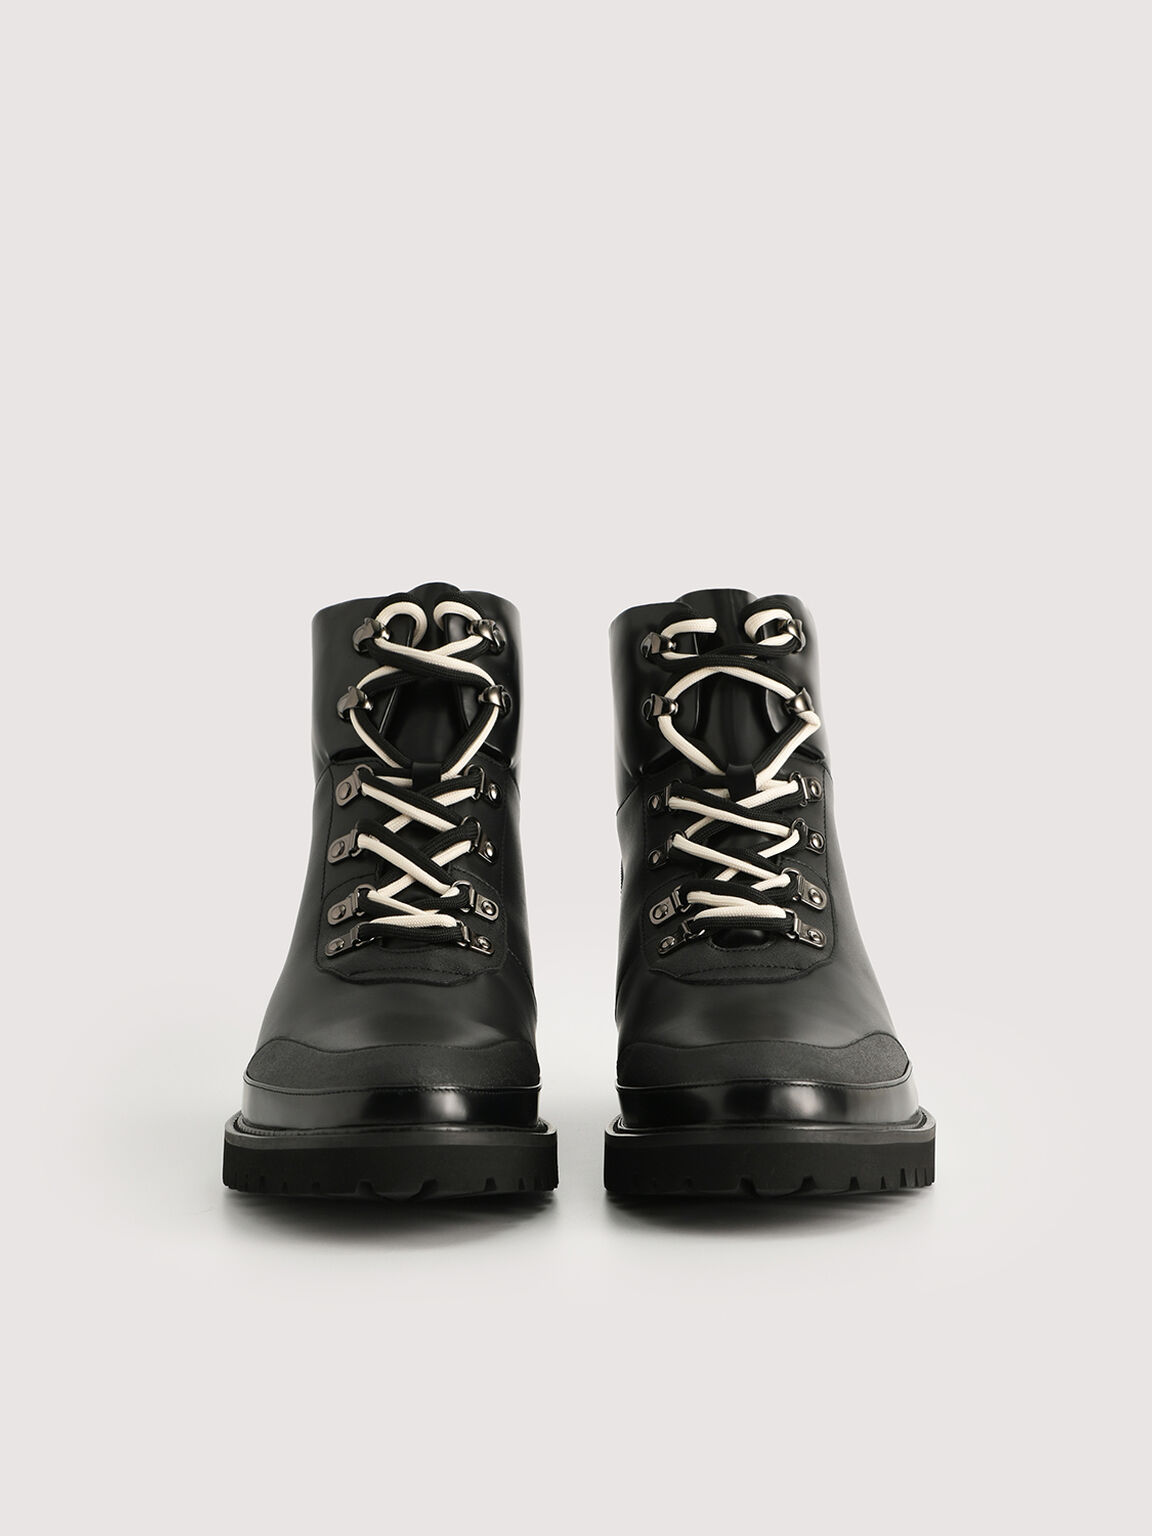 Leather Combat Boots, Black, hi-res